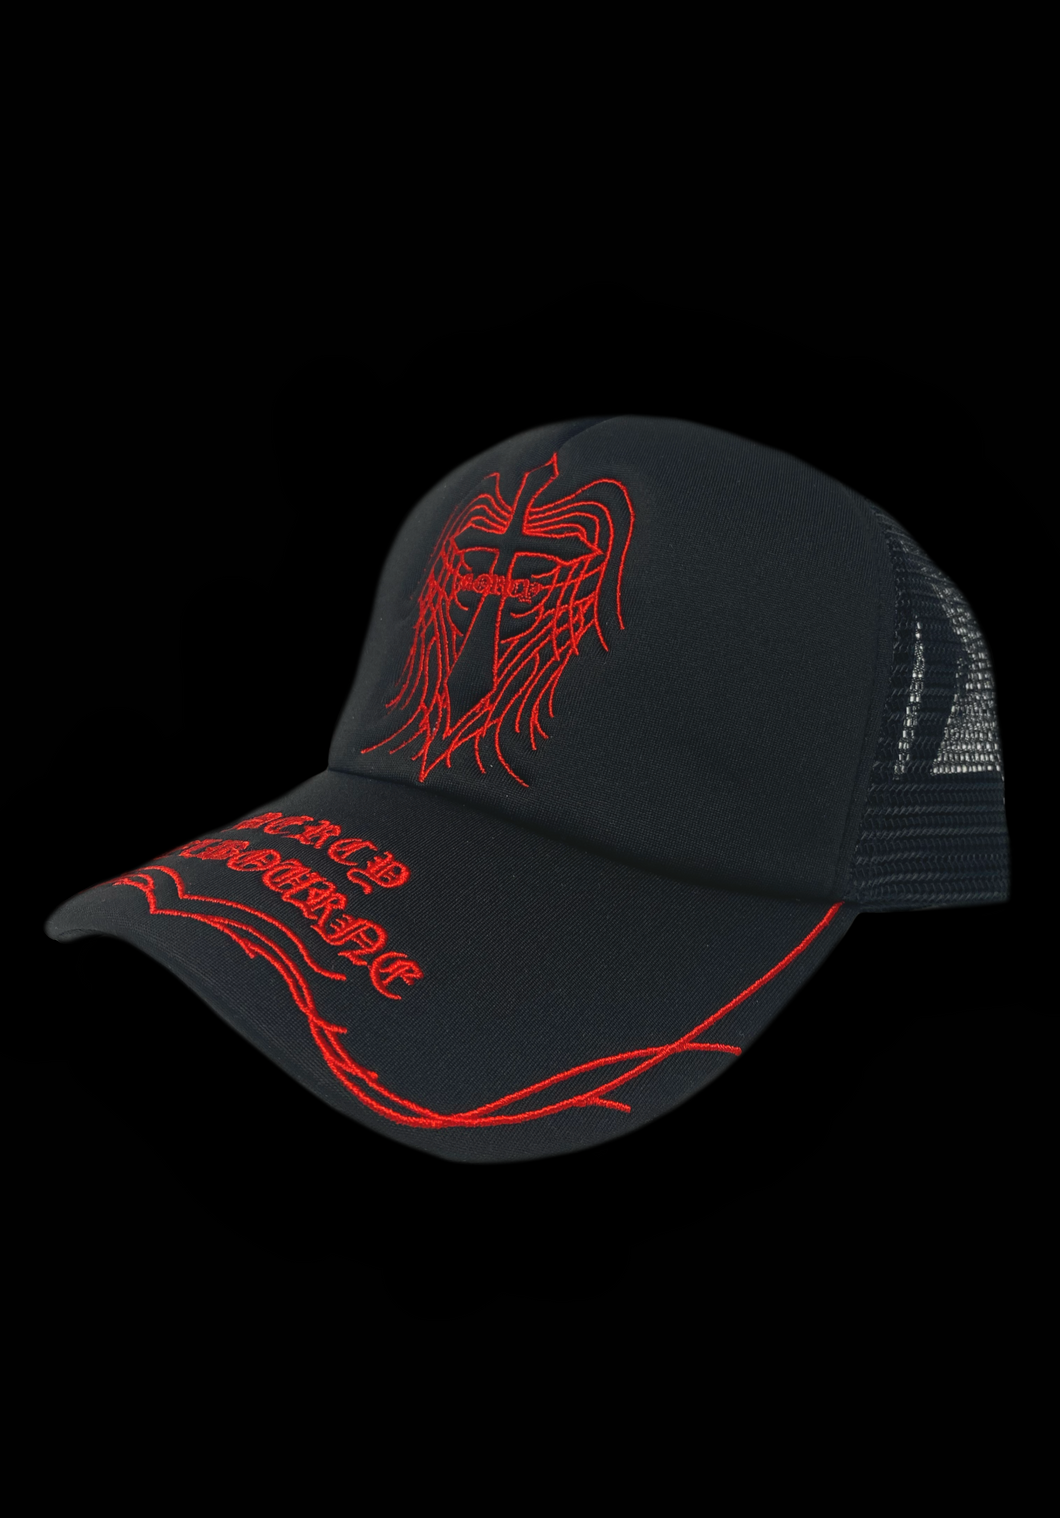 Trucker Hat: Black